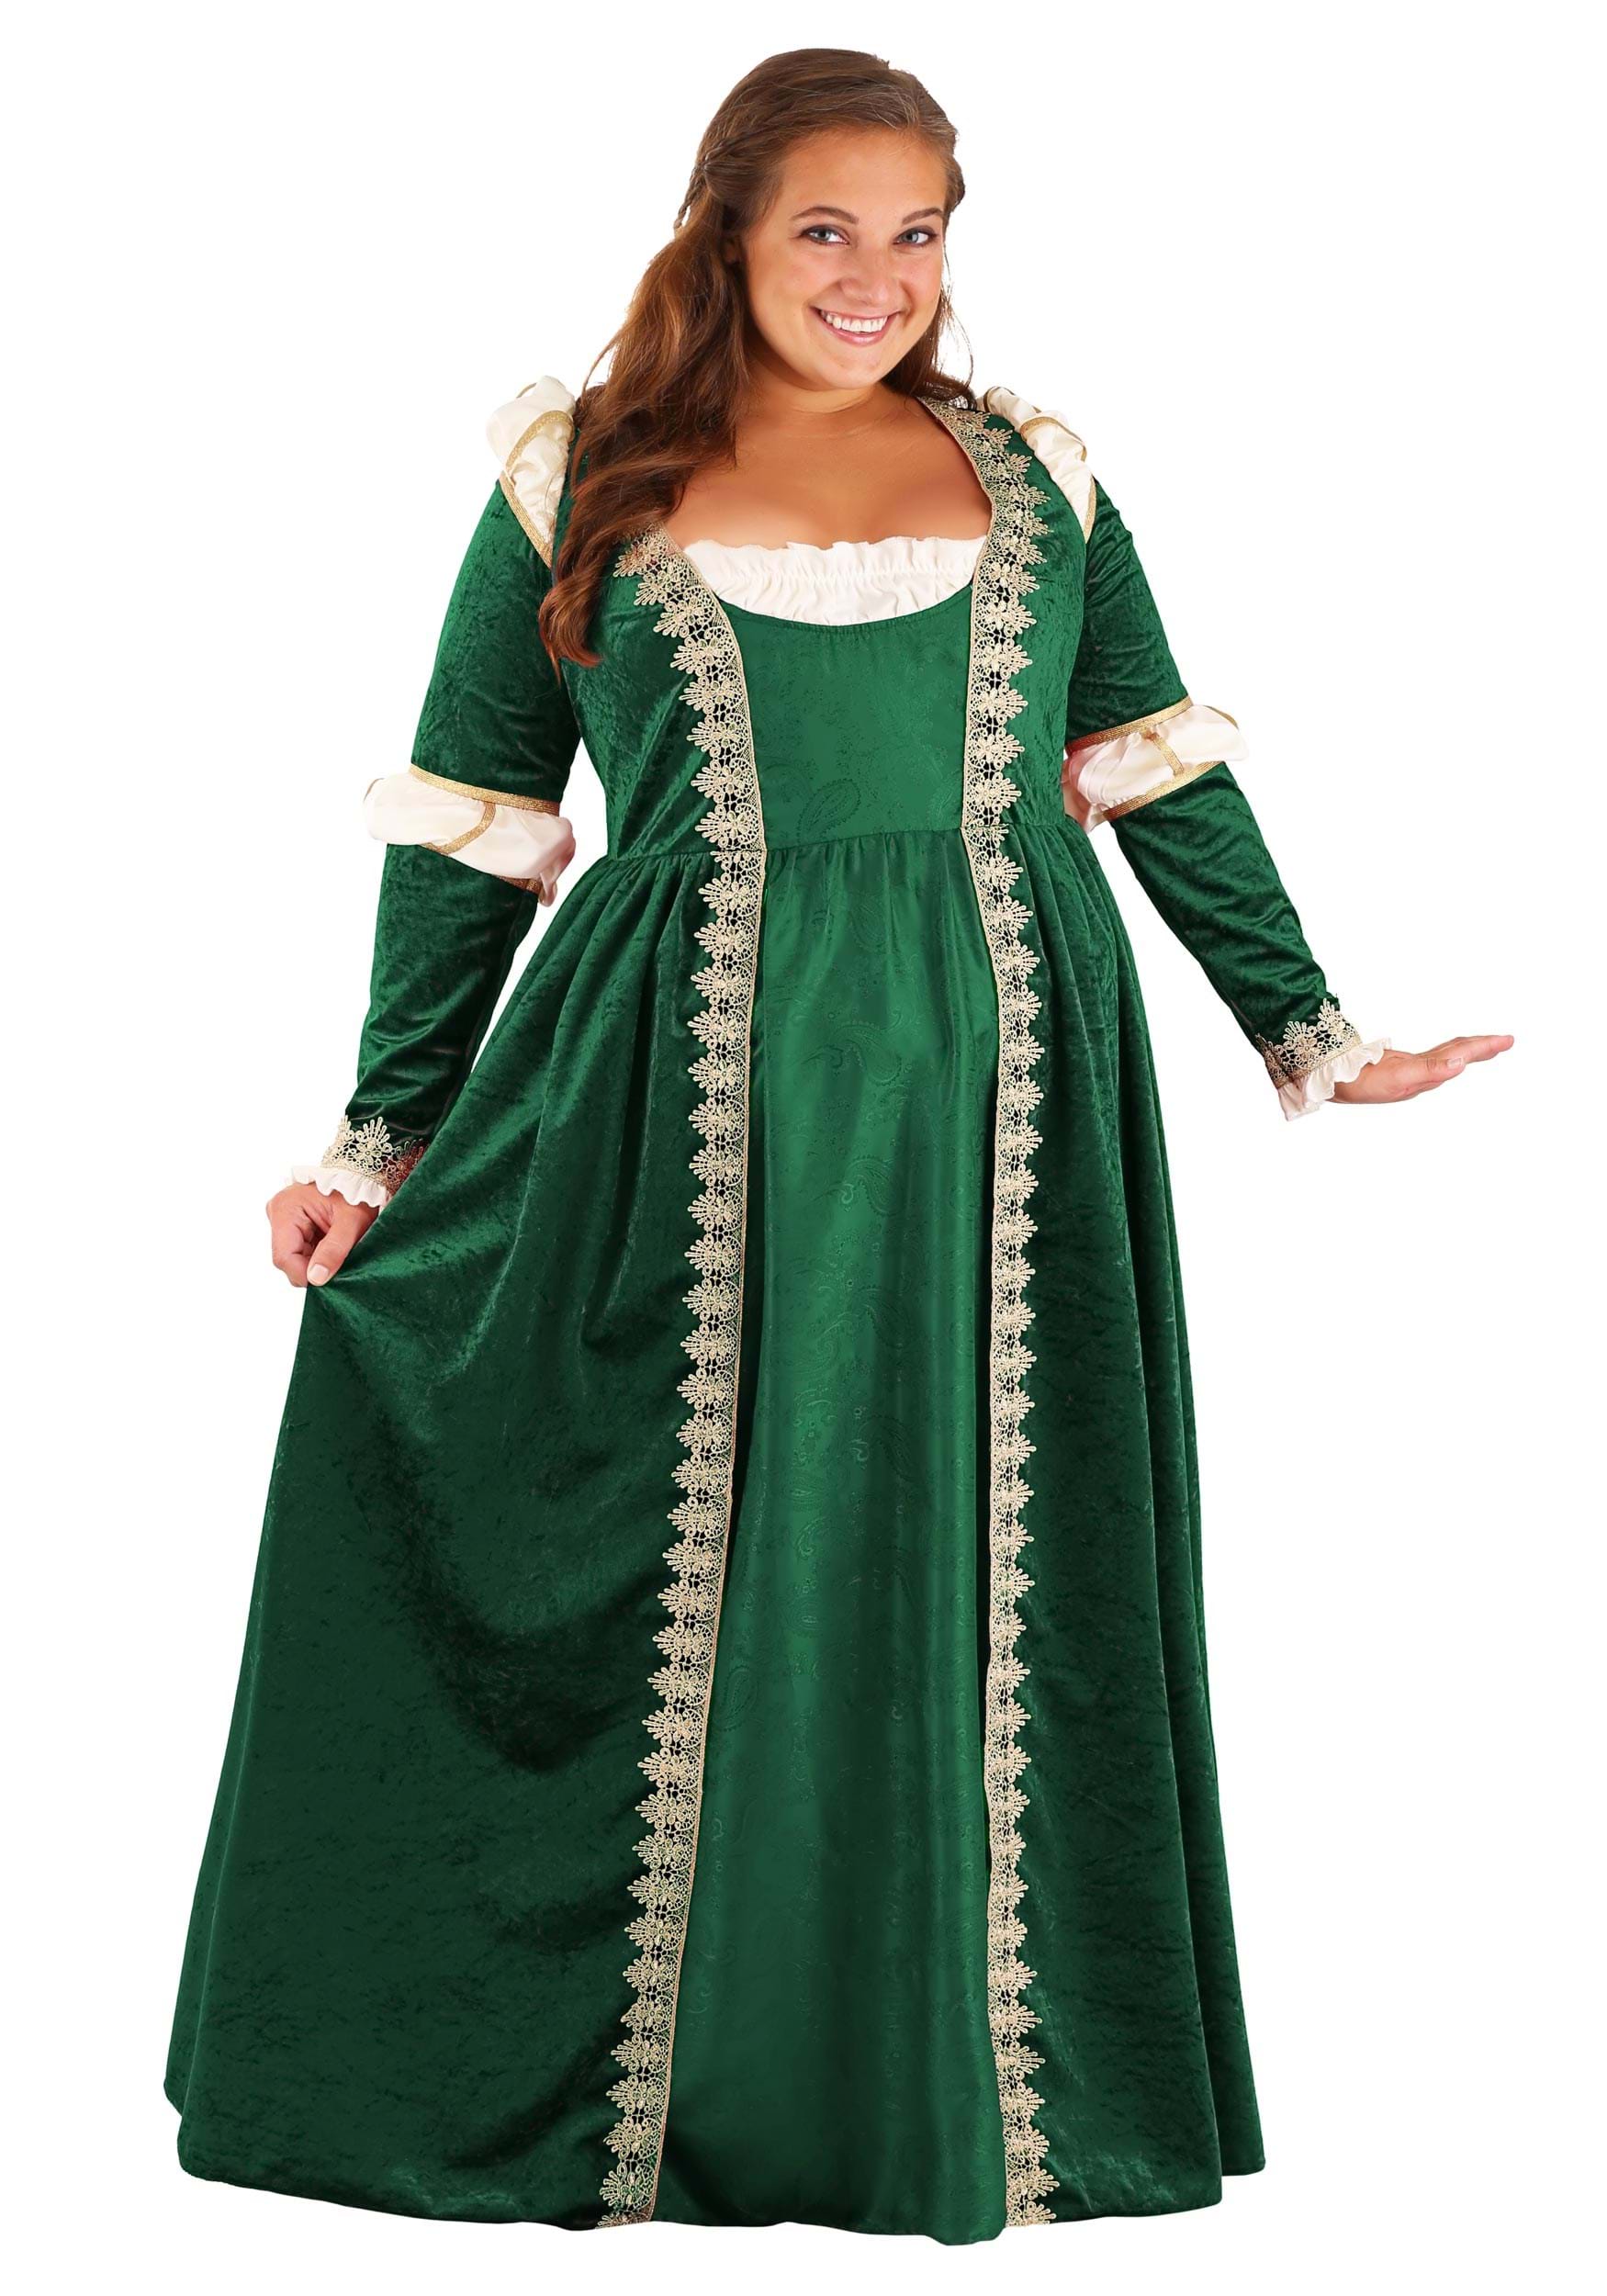 Plus Size Emerald Maiden Women’s Costume